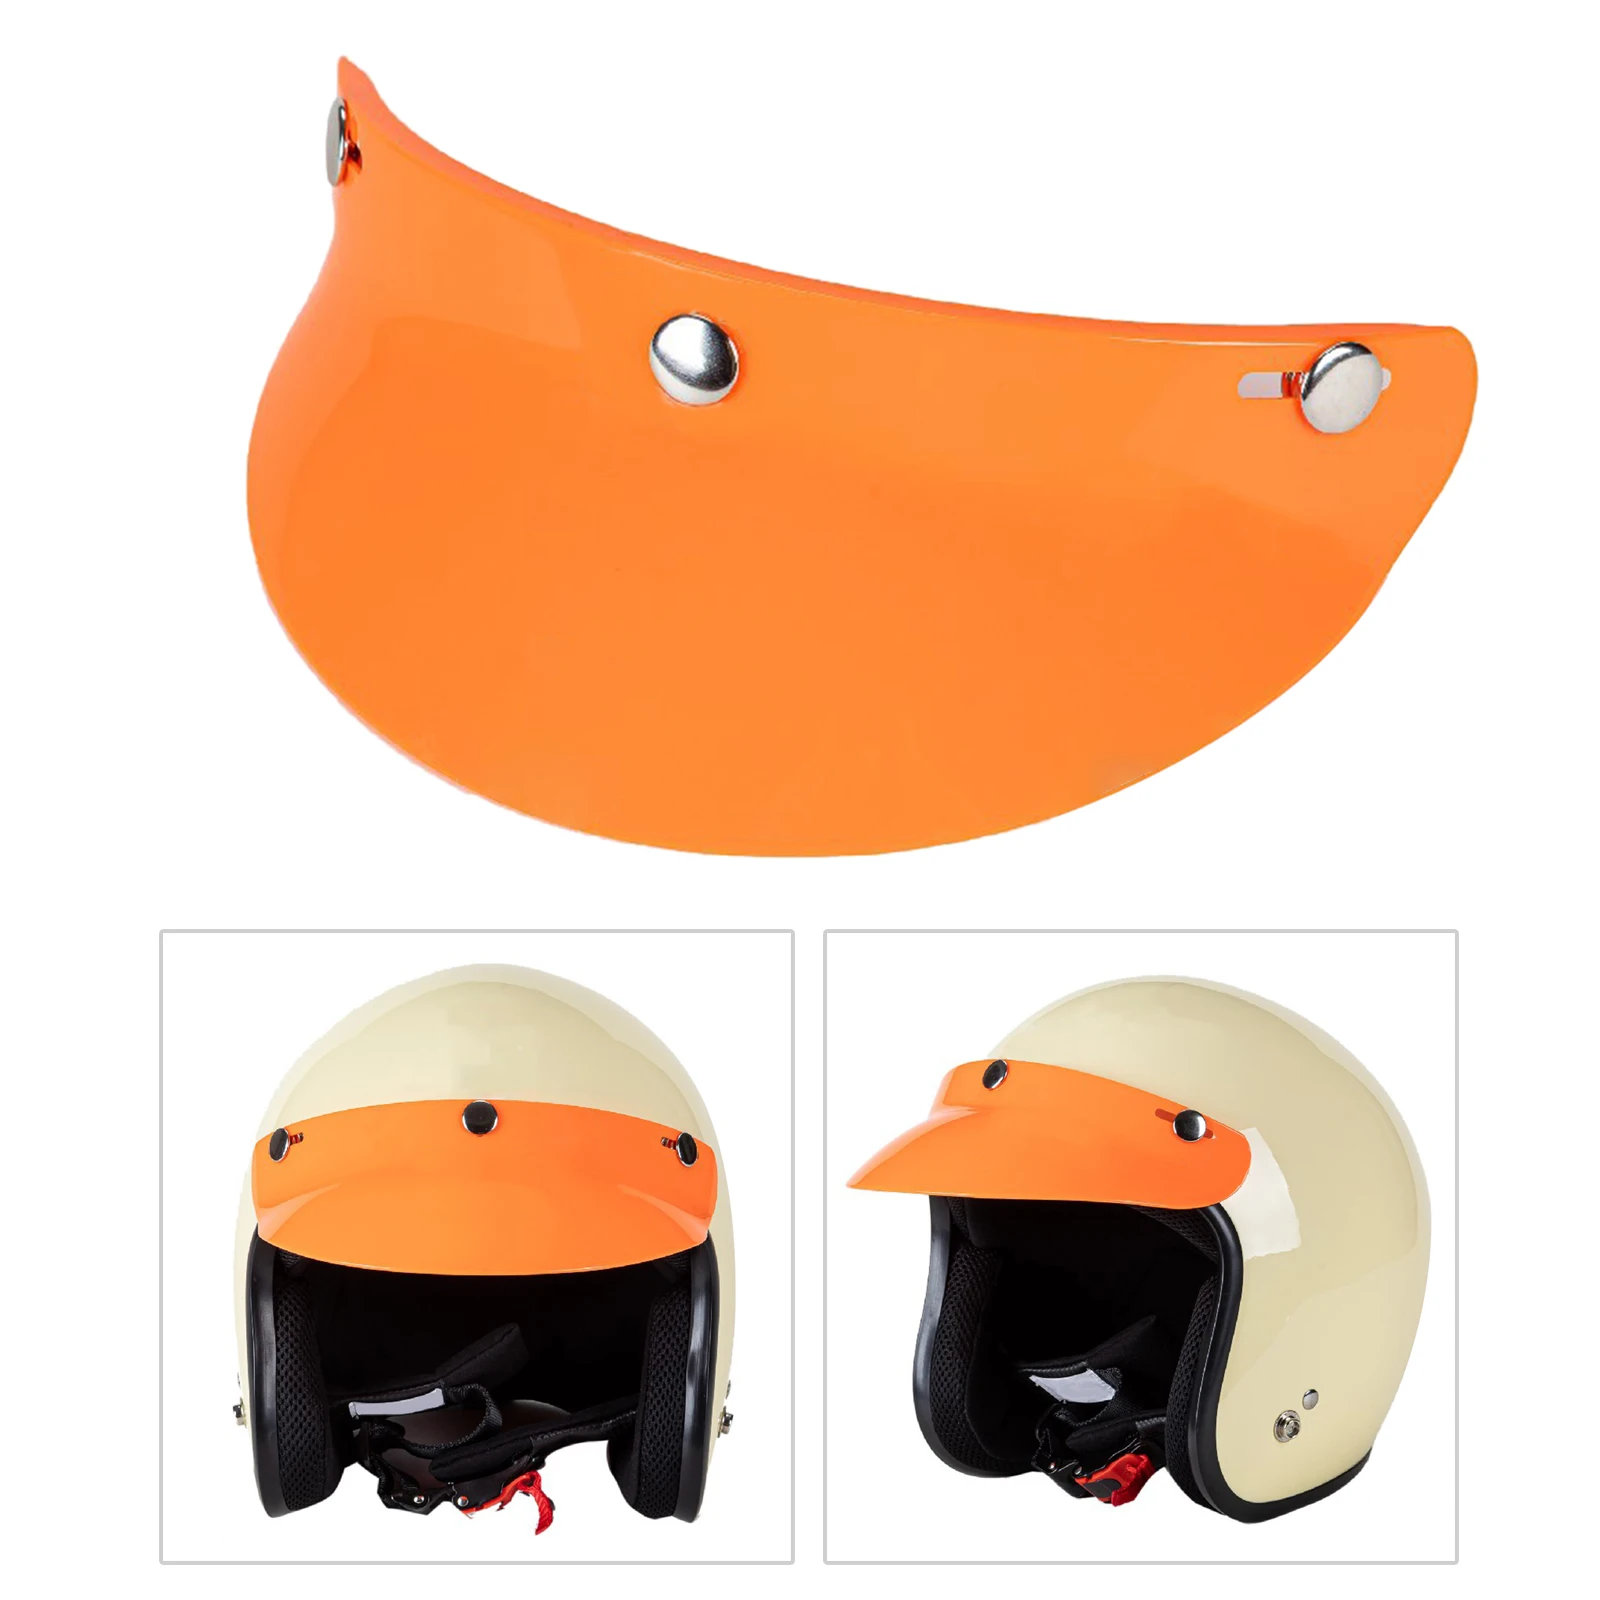 Uninersal  Peak Retro Helmet Visor Shield UV Sunshield,15cm x 5cm